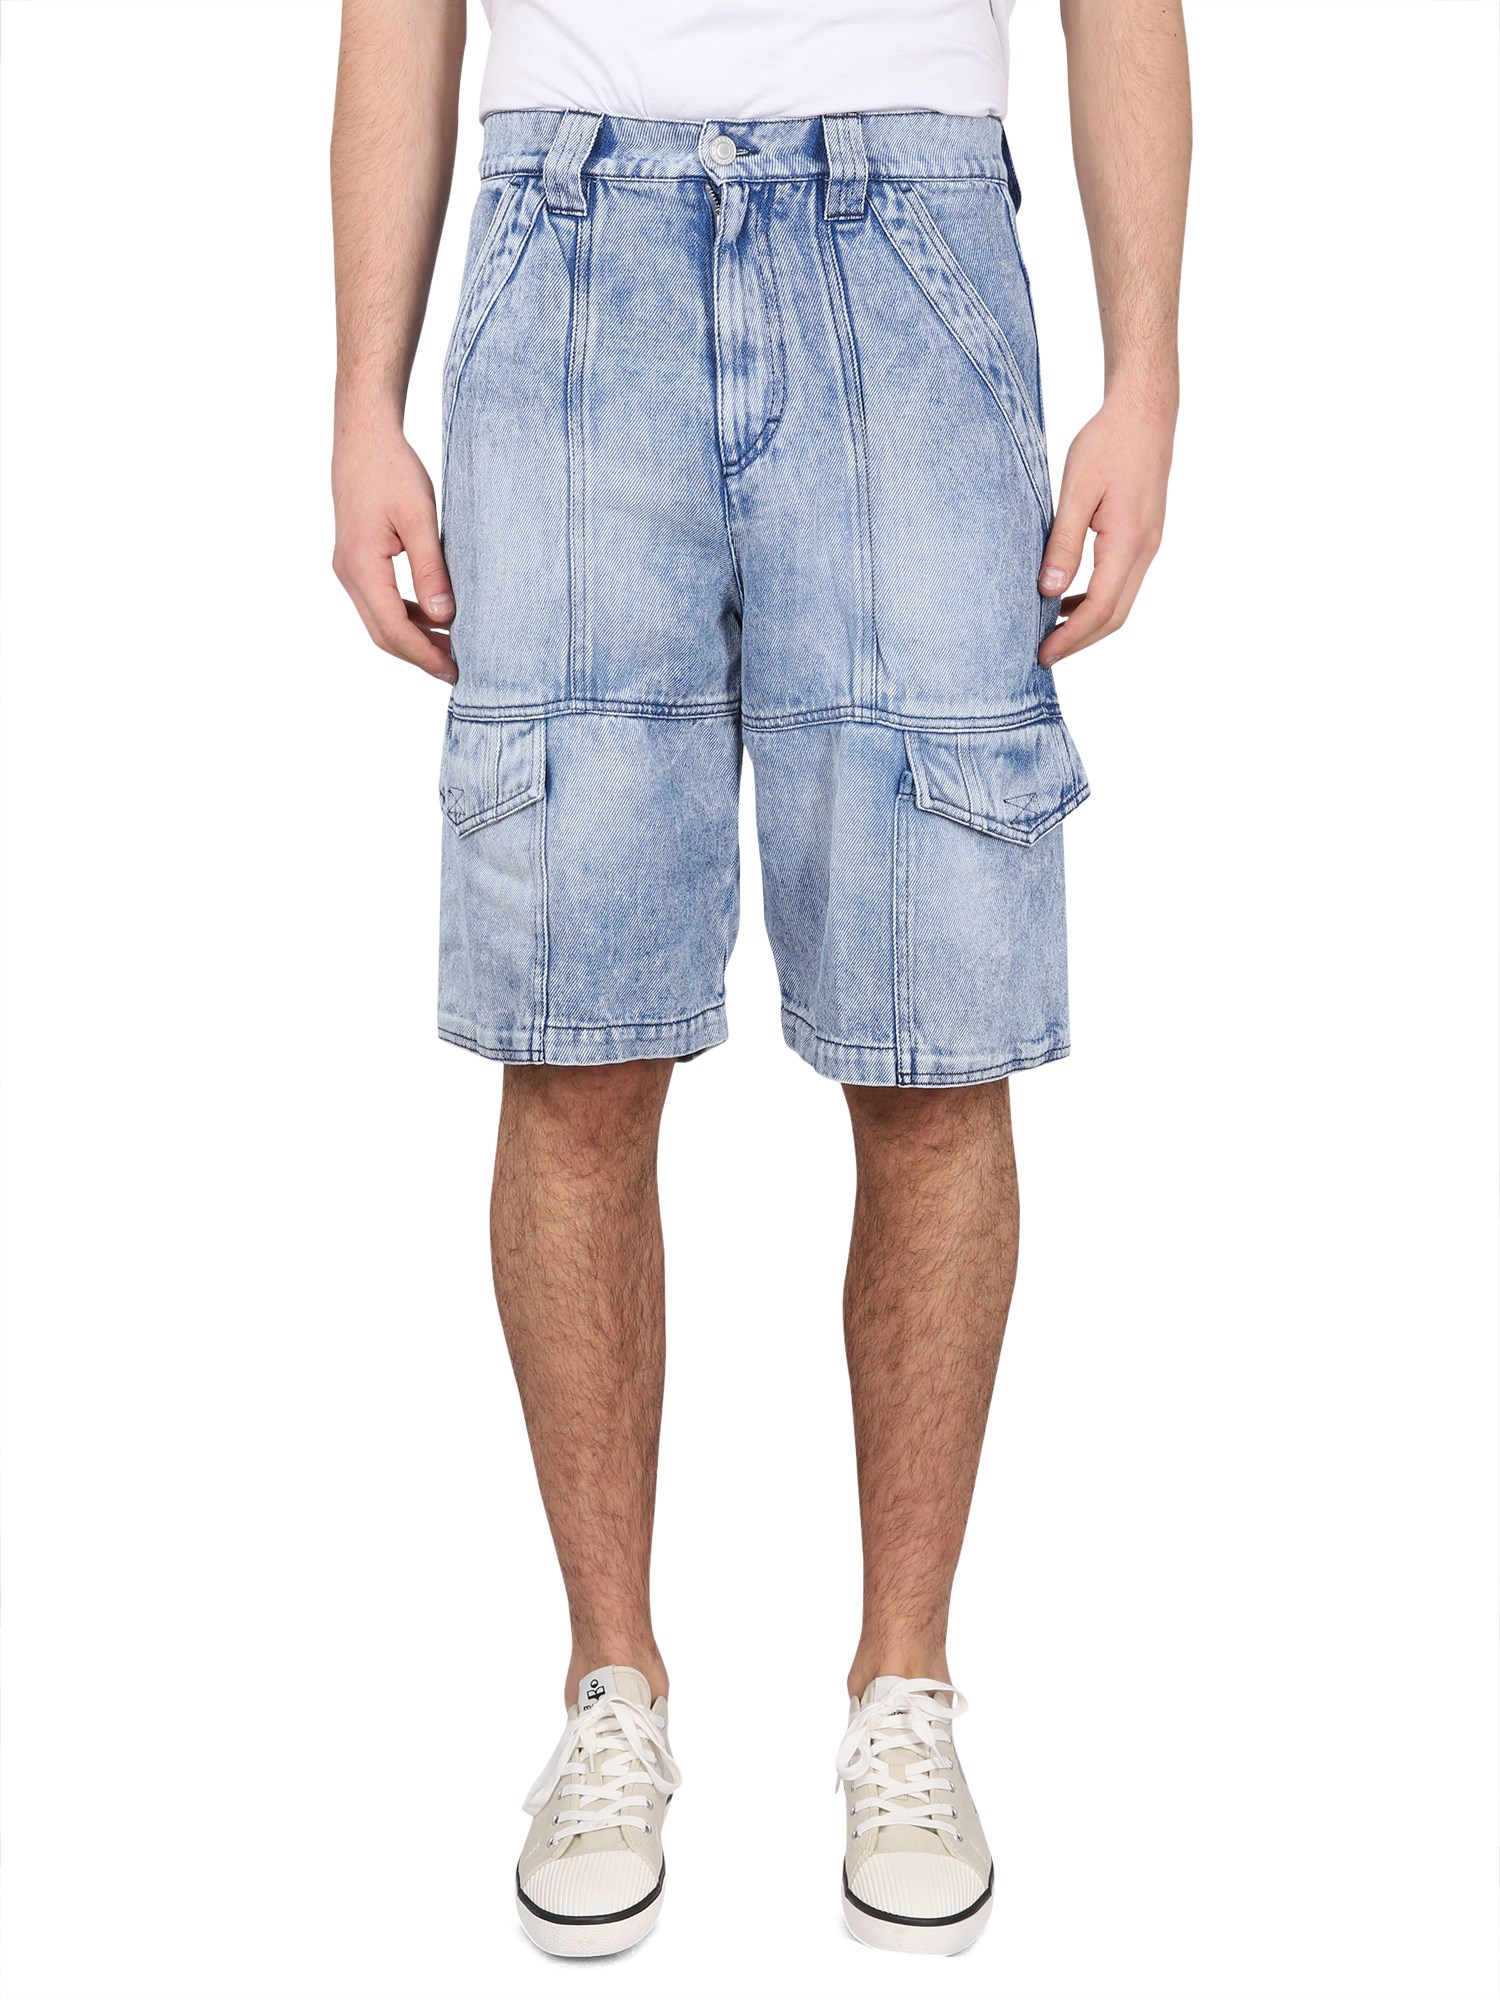 Marant Denim Cargo Shorts In Blue